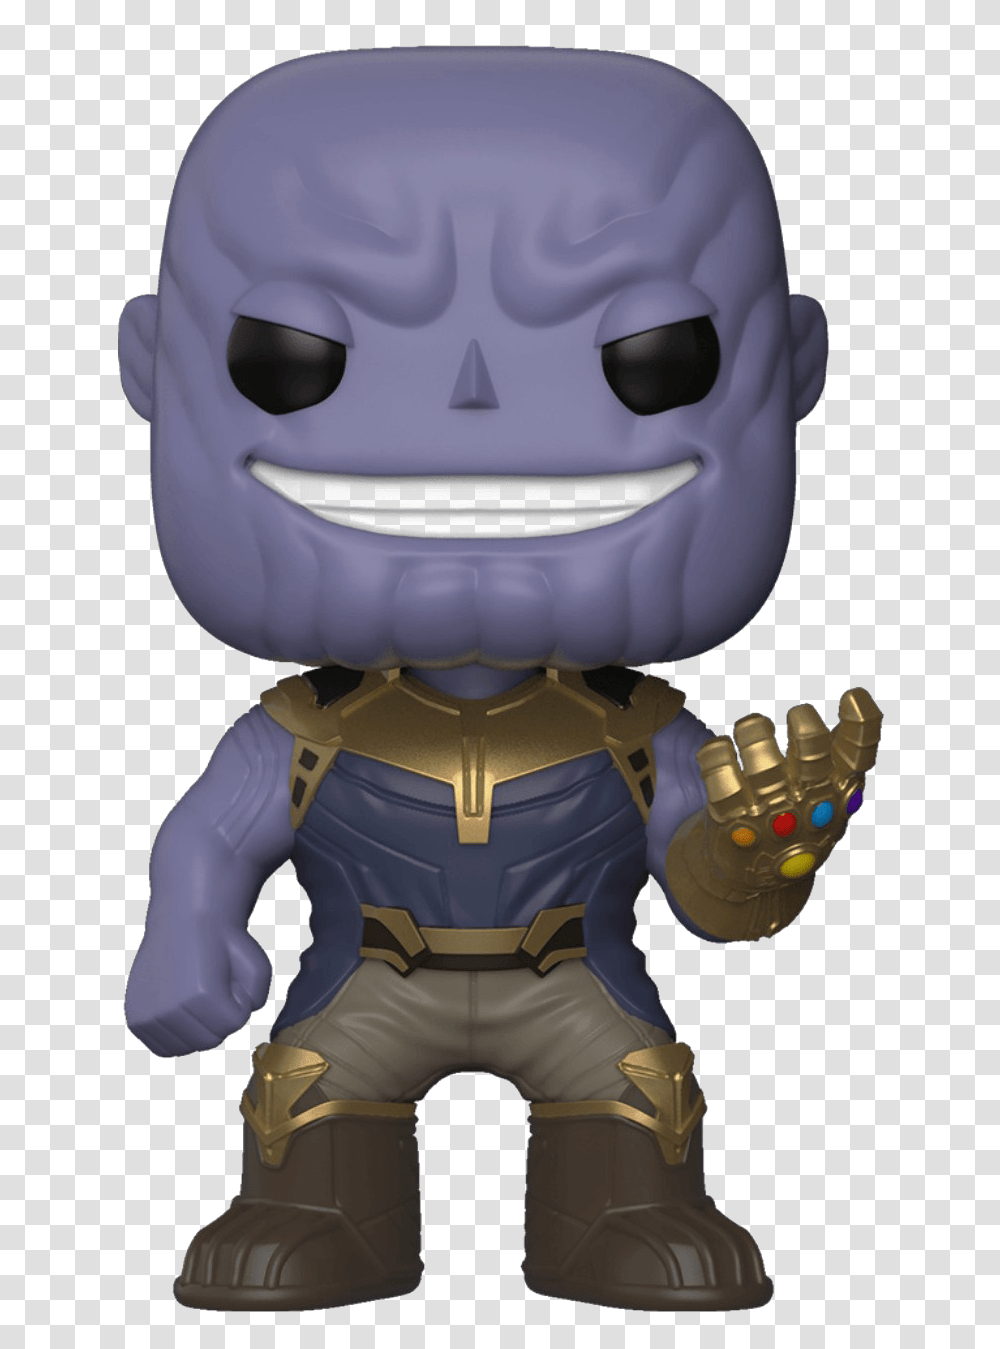 Thanos Image Background Thanos Pop, Helmet, Apparel, Robot Transparent Png